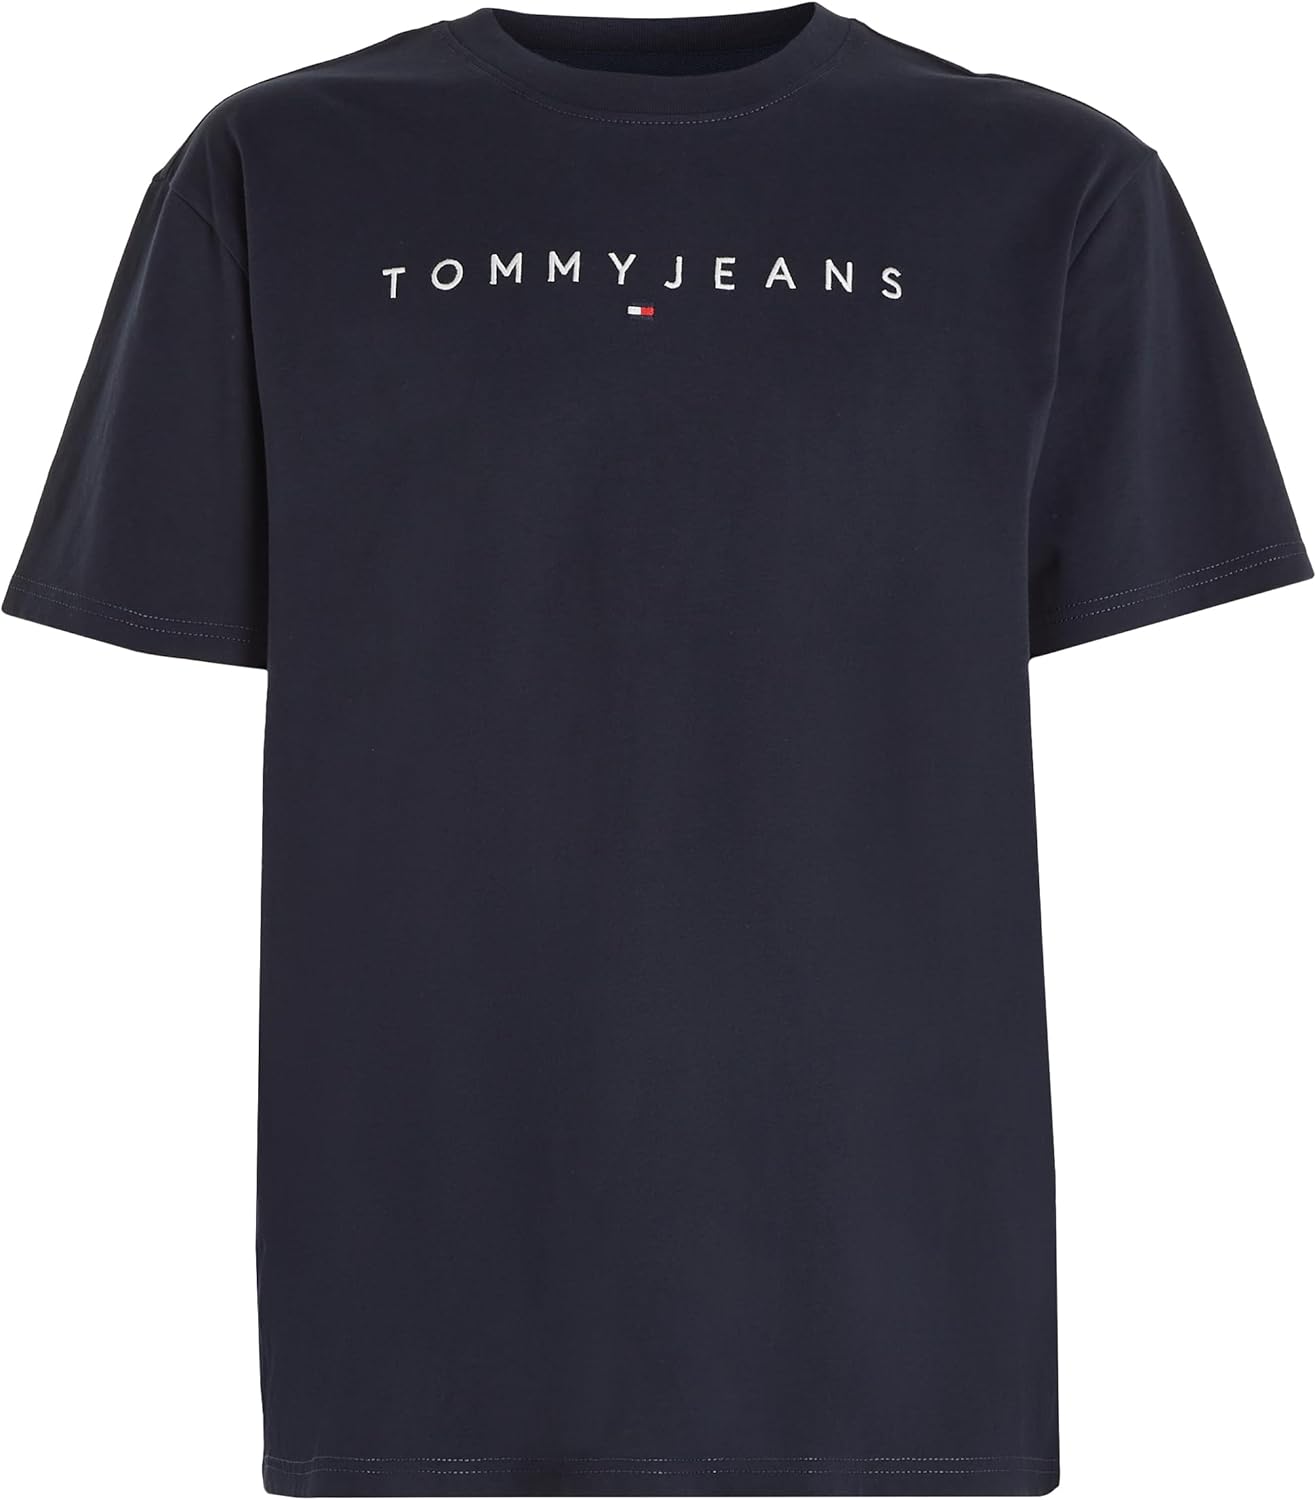 TOMMY HILFIGER T-shirt Uomo - Blu modello DM0DM17993